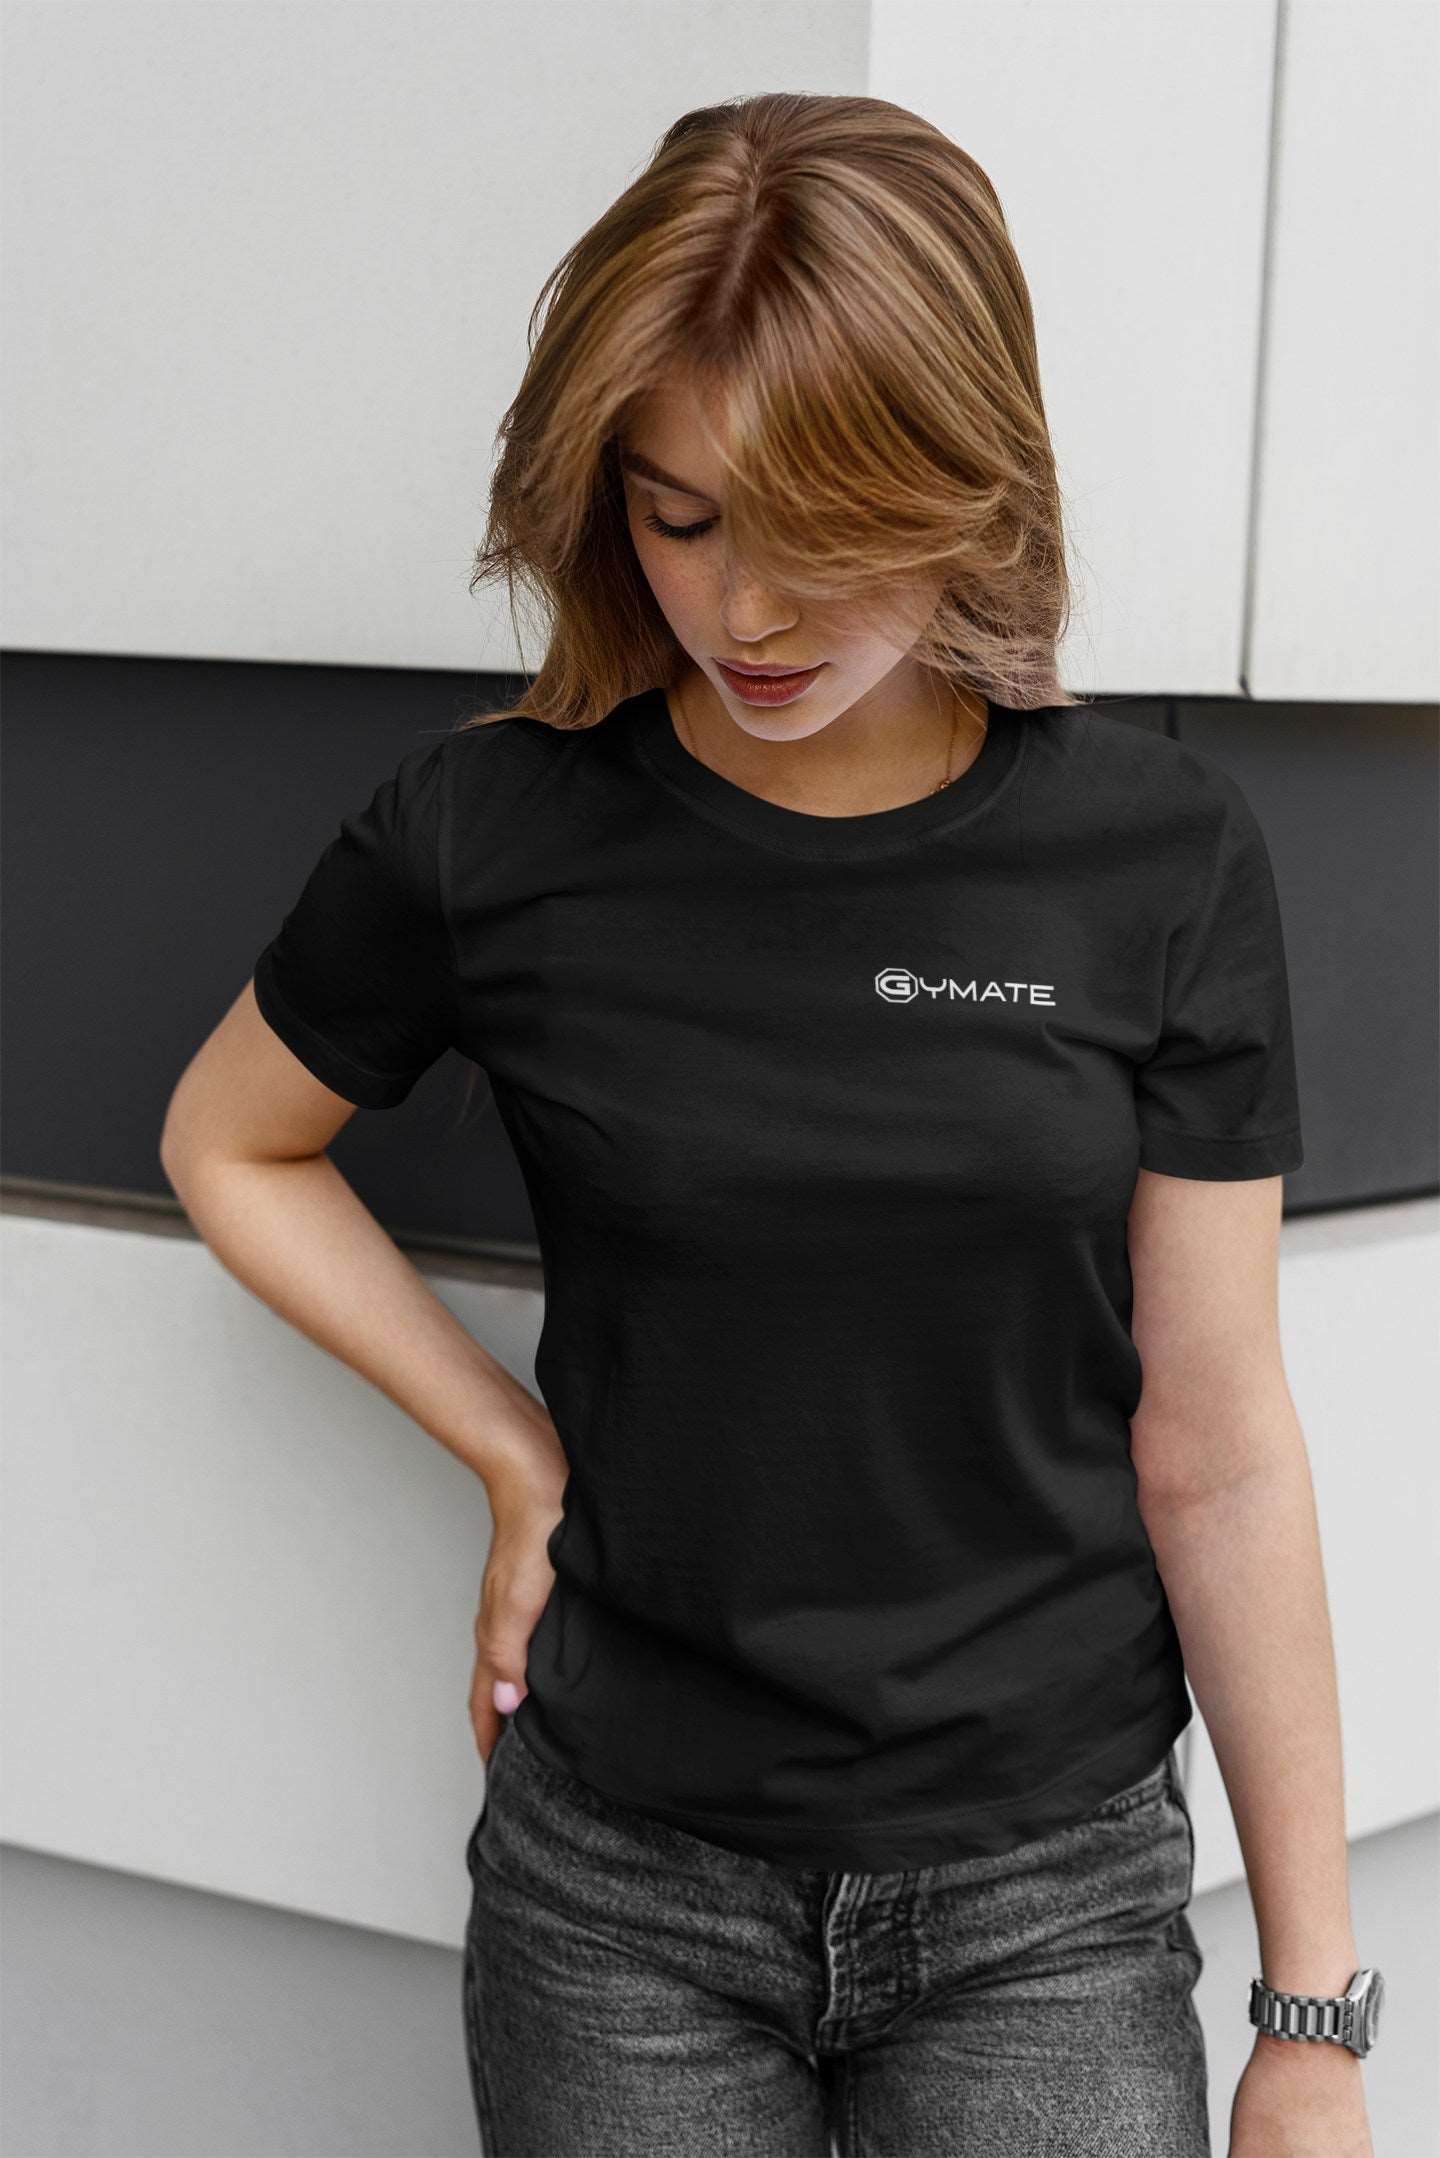 Designer T shirts for women Gymate [chest] black